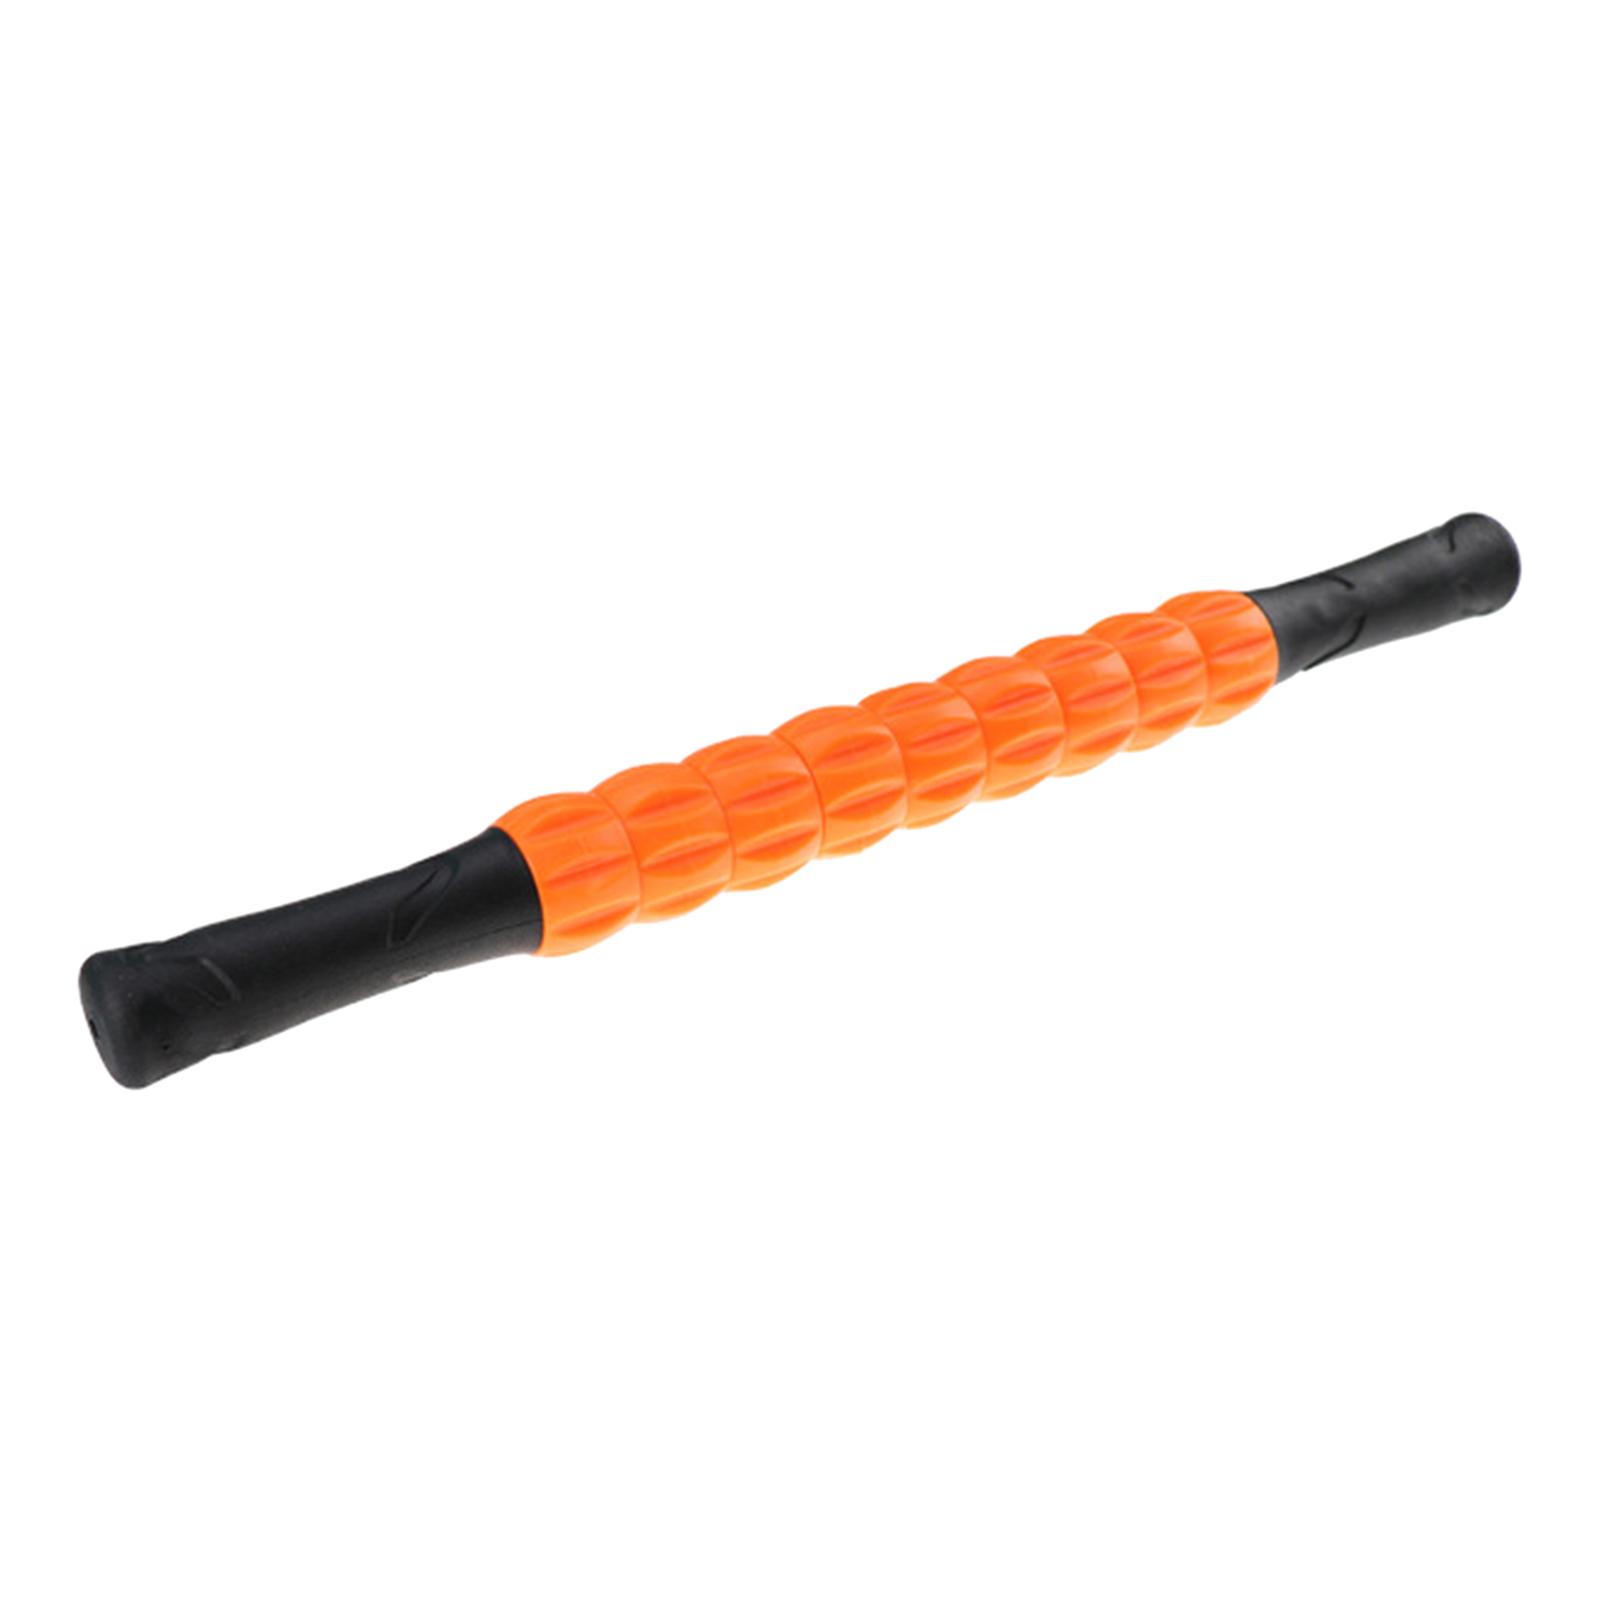 Portable Muscle Roller Stick for Athletes Full Body Massage Sticks Orange